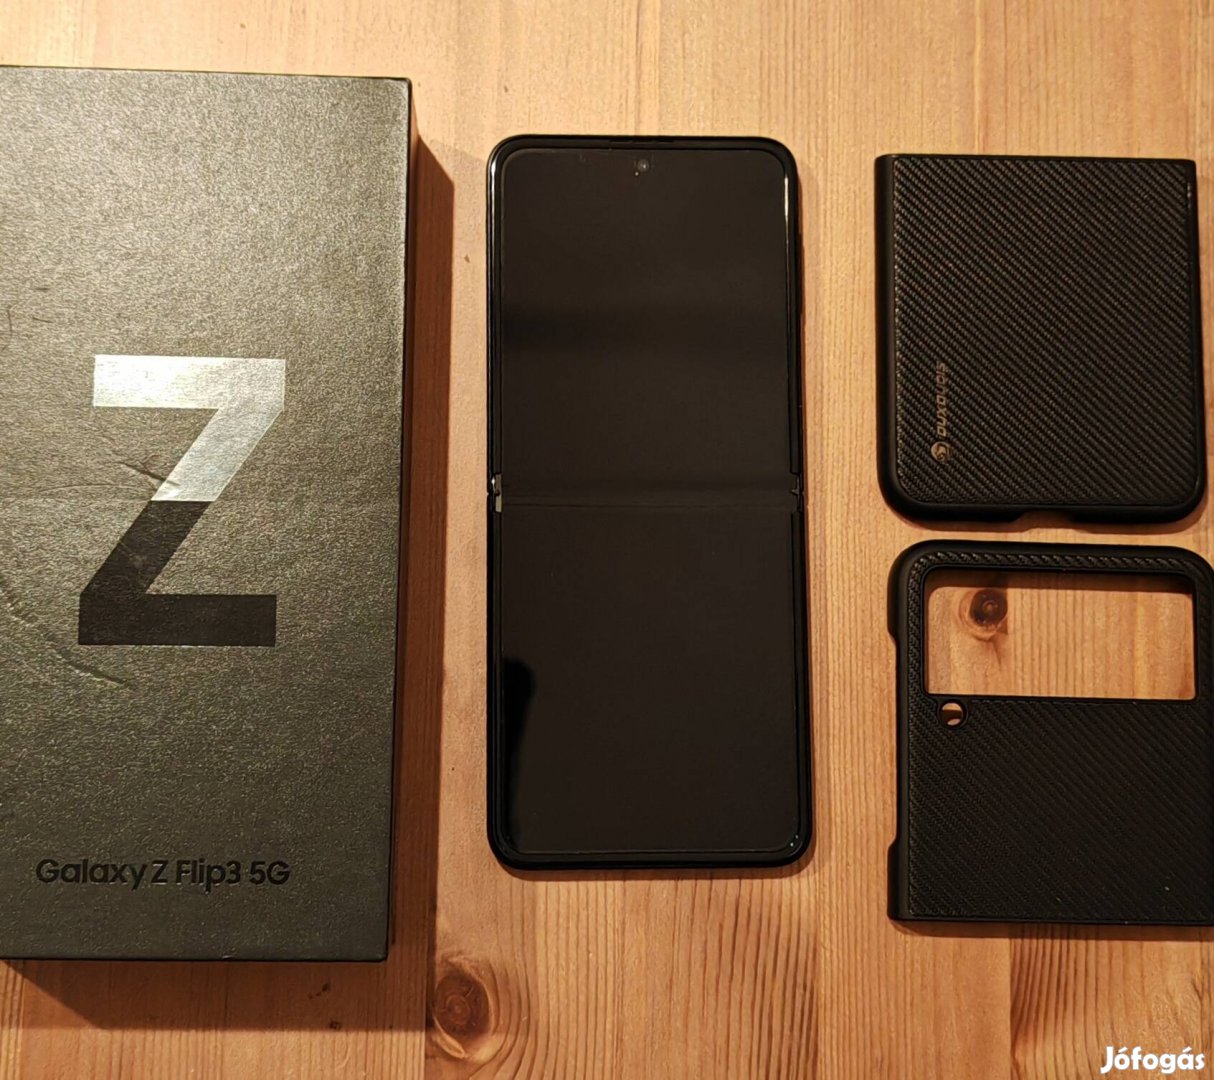 Samsung Z flip 3 eladó.